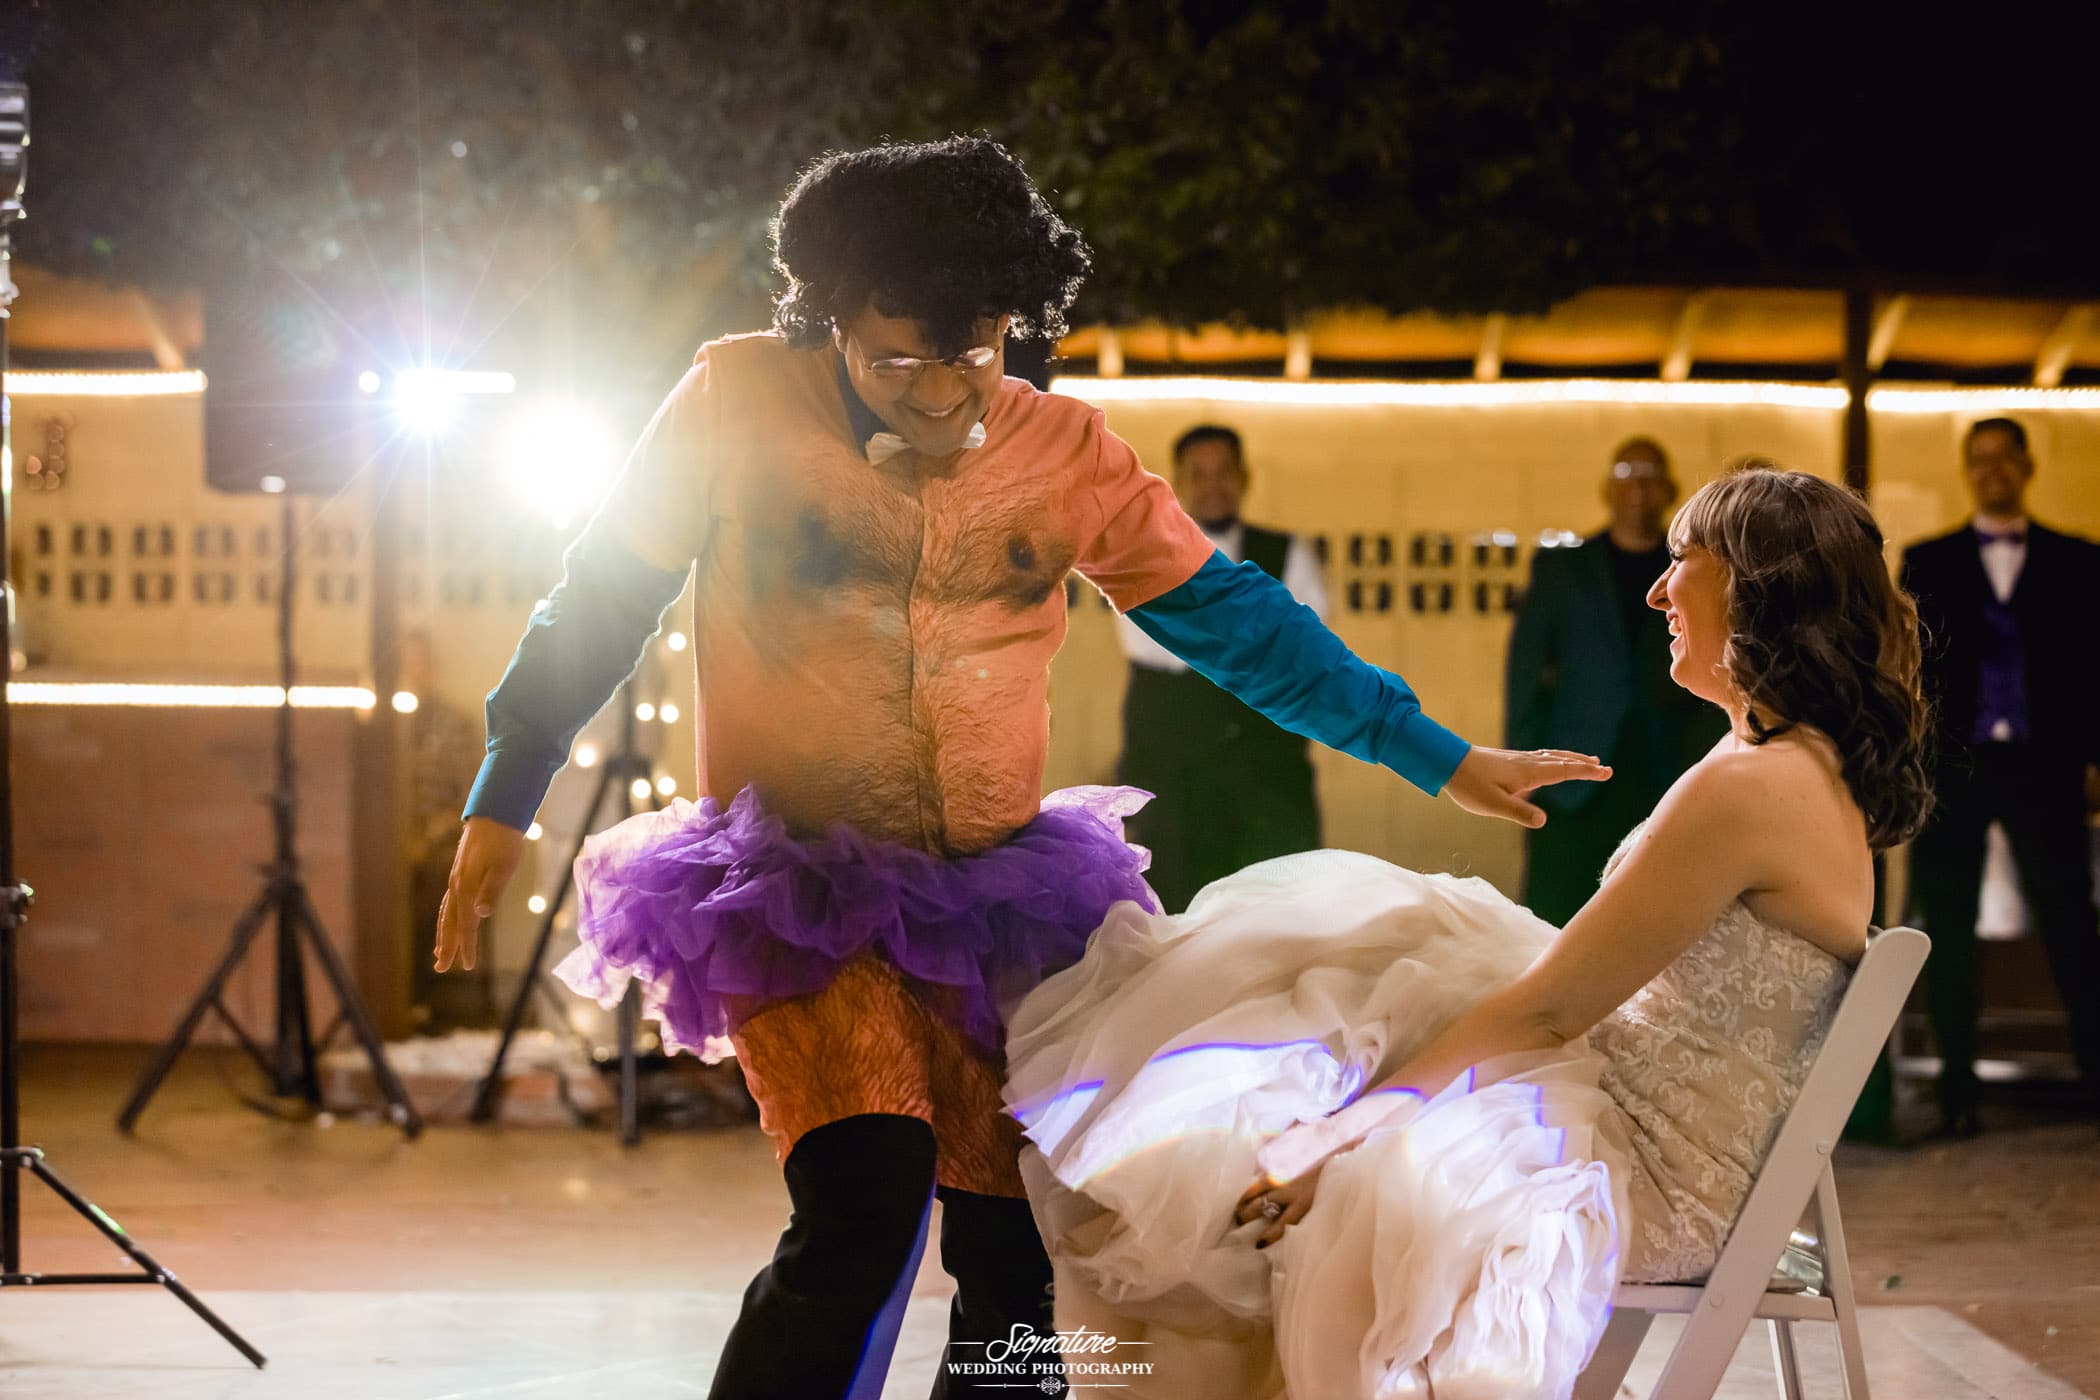 Man in tutu in front of bride for garter toss